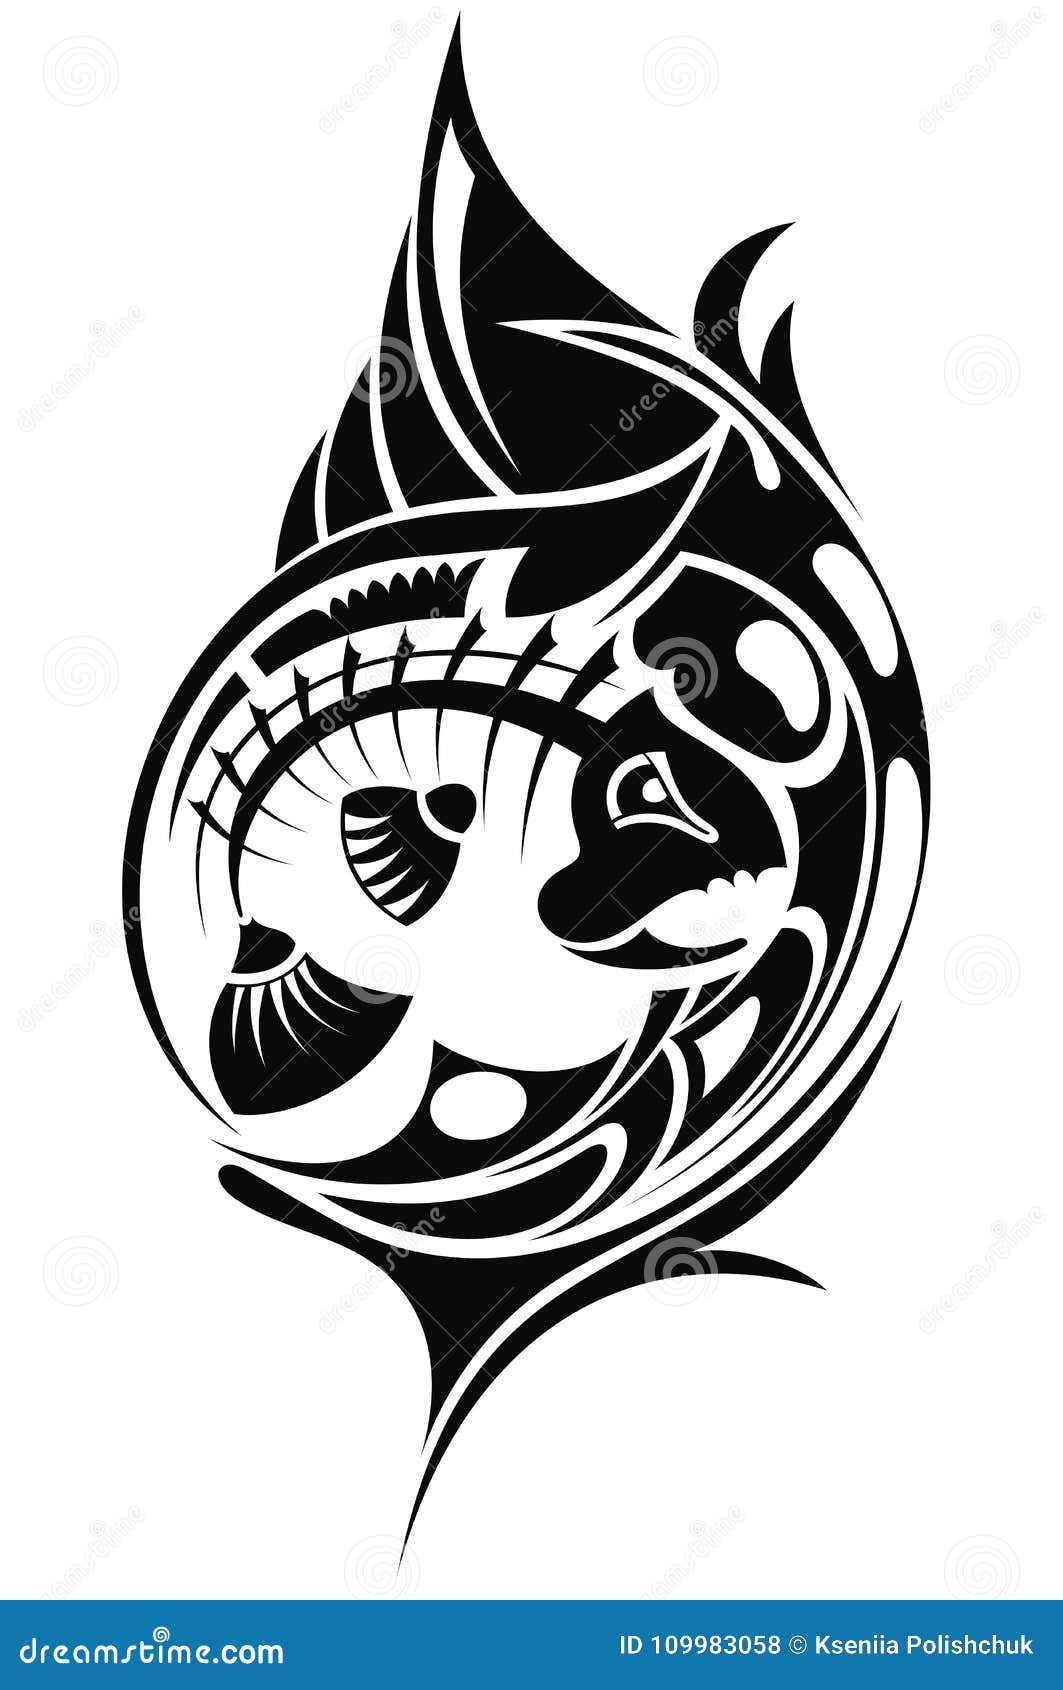 Fish Bone Tattoo Stock Illustrations – 267 Fish Bone Tattoo Stock Illustrations, Vectors & Clipart - Dreamstime